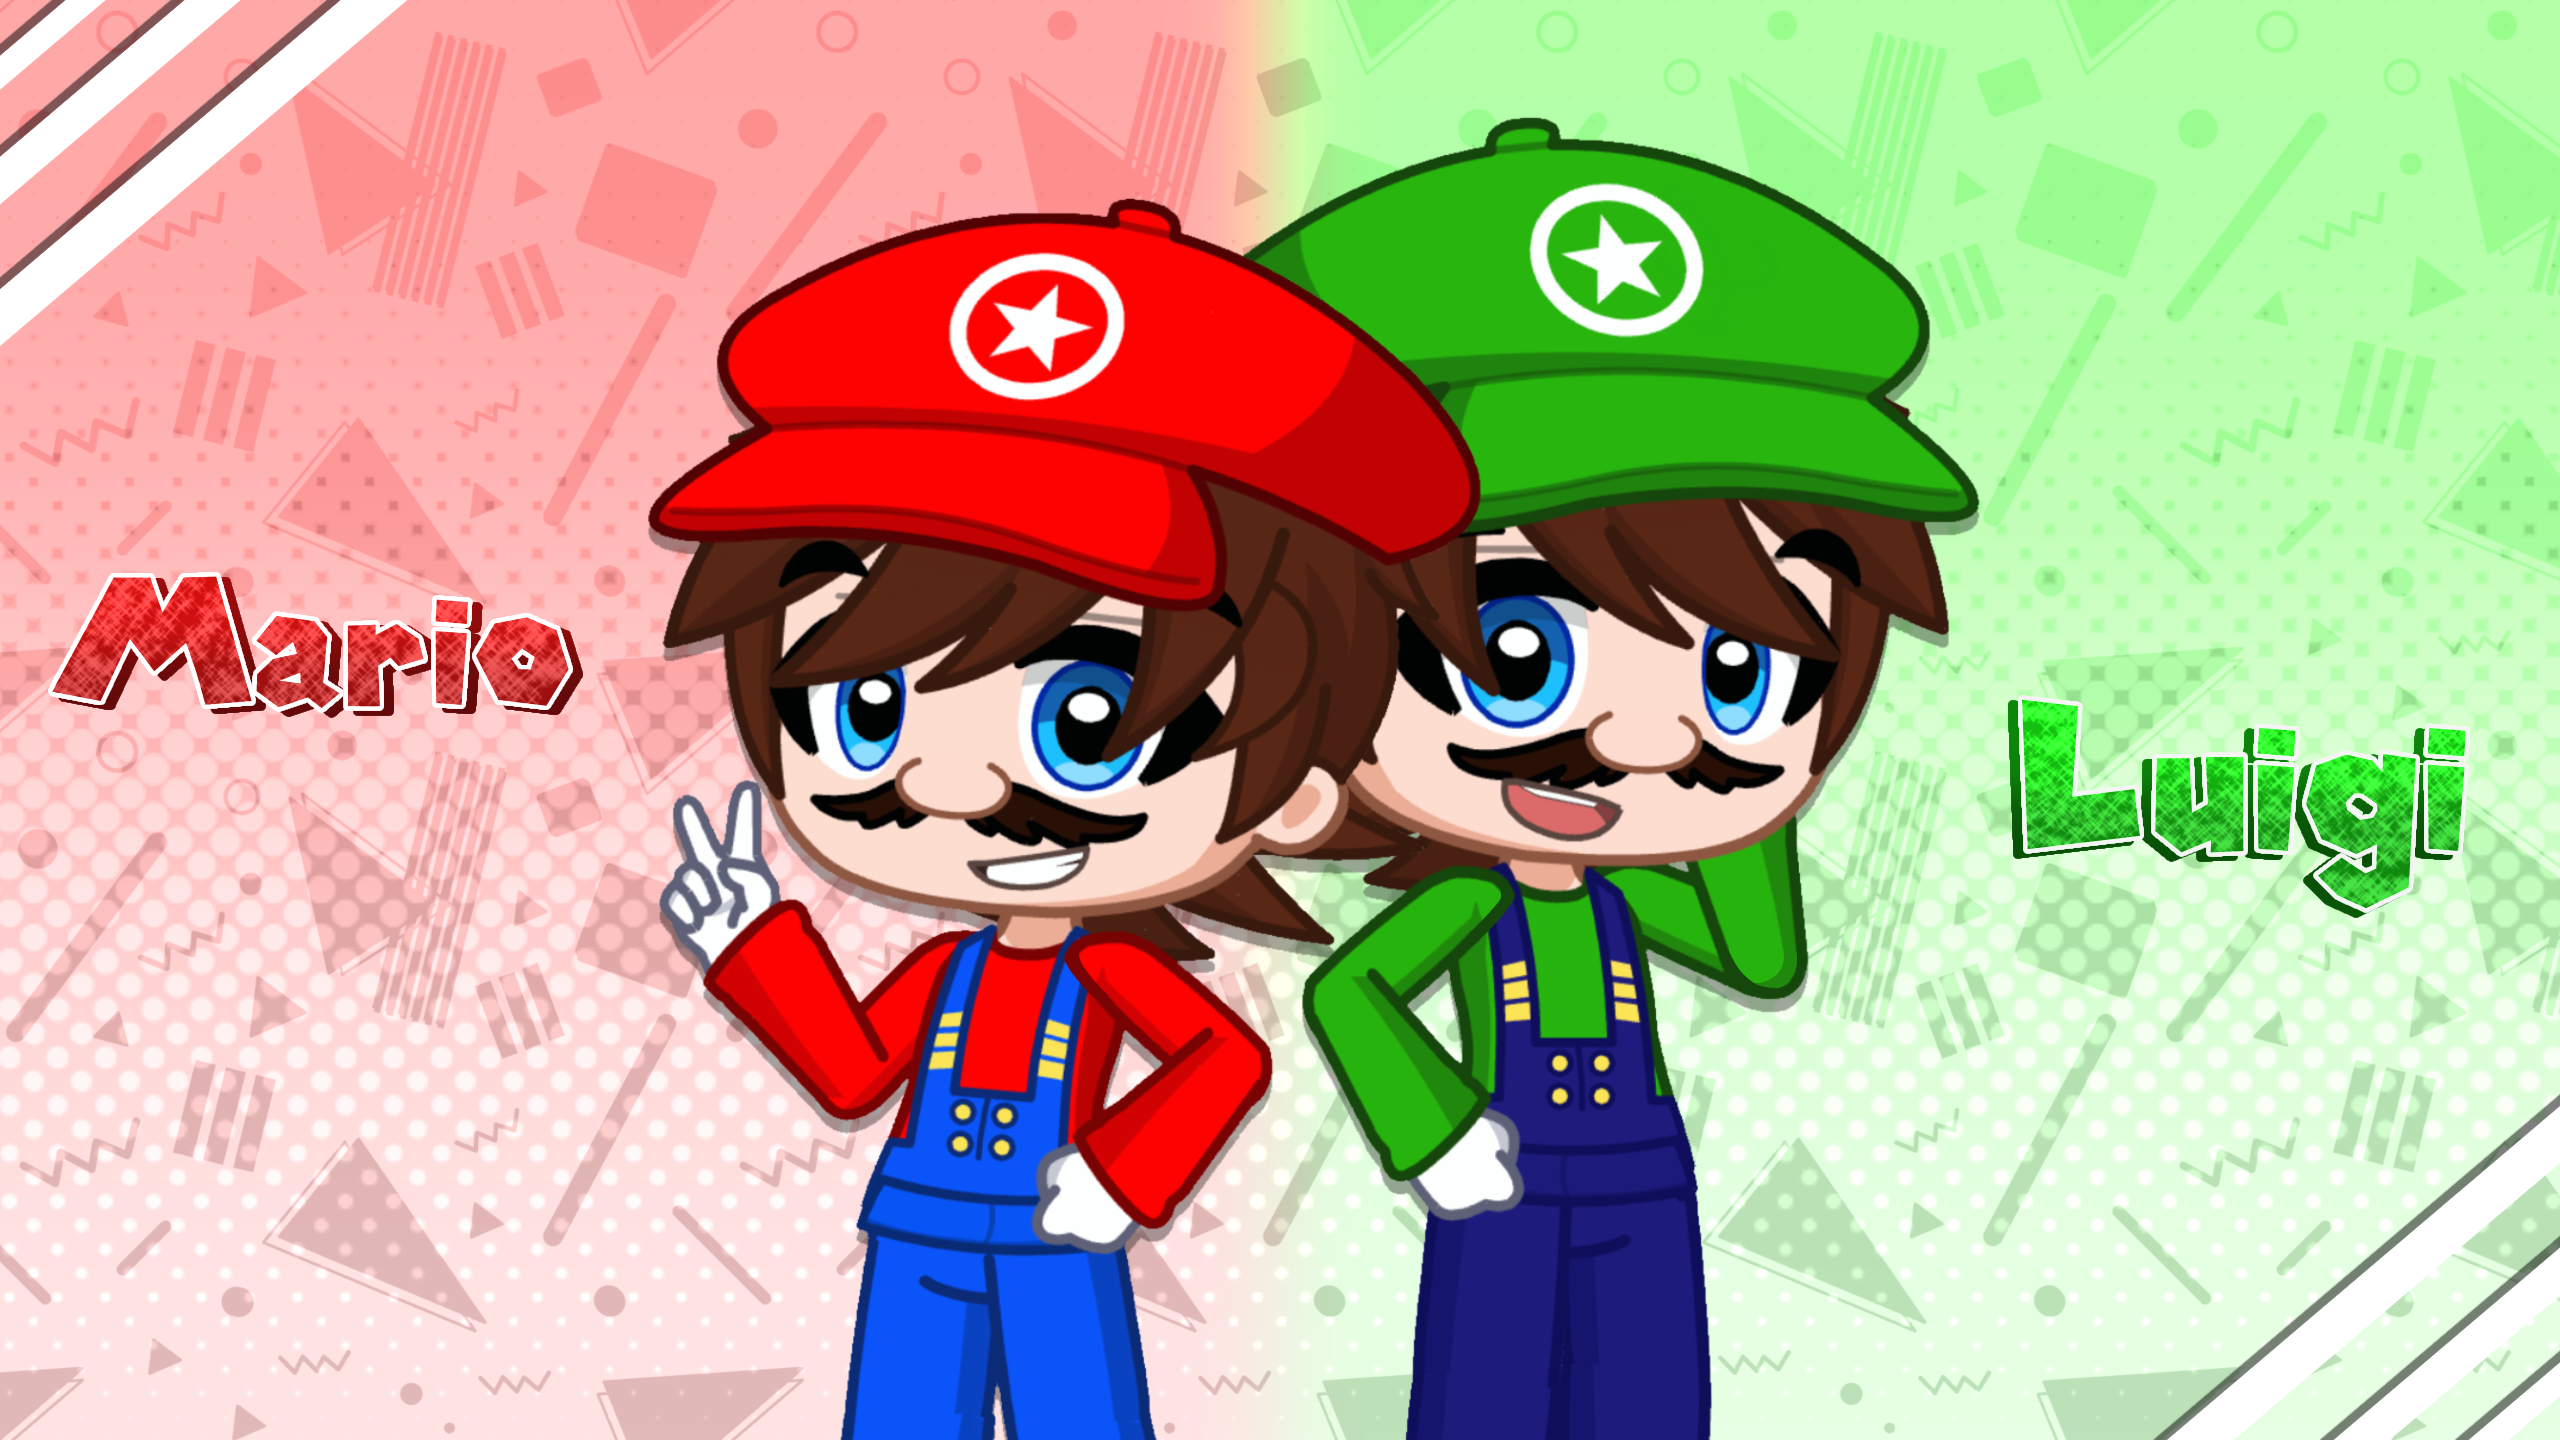 Mario and Luigi in Gacha Life 2 by softmoonbow on DeviantArt